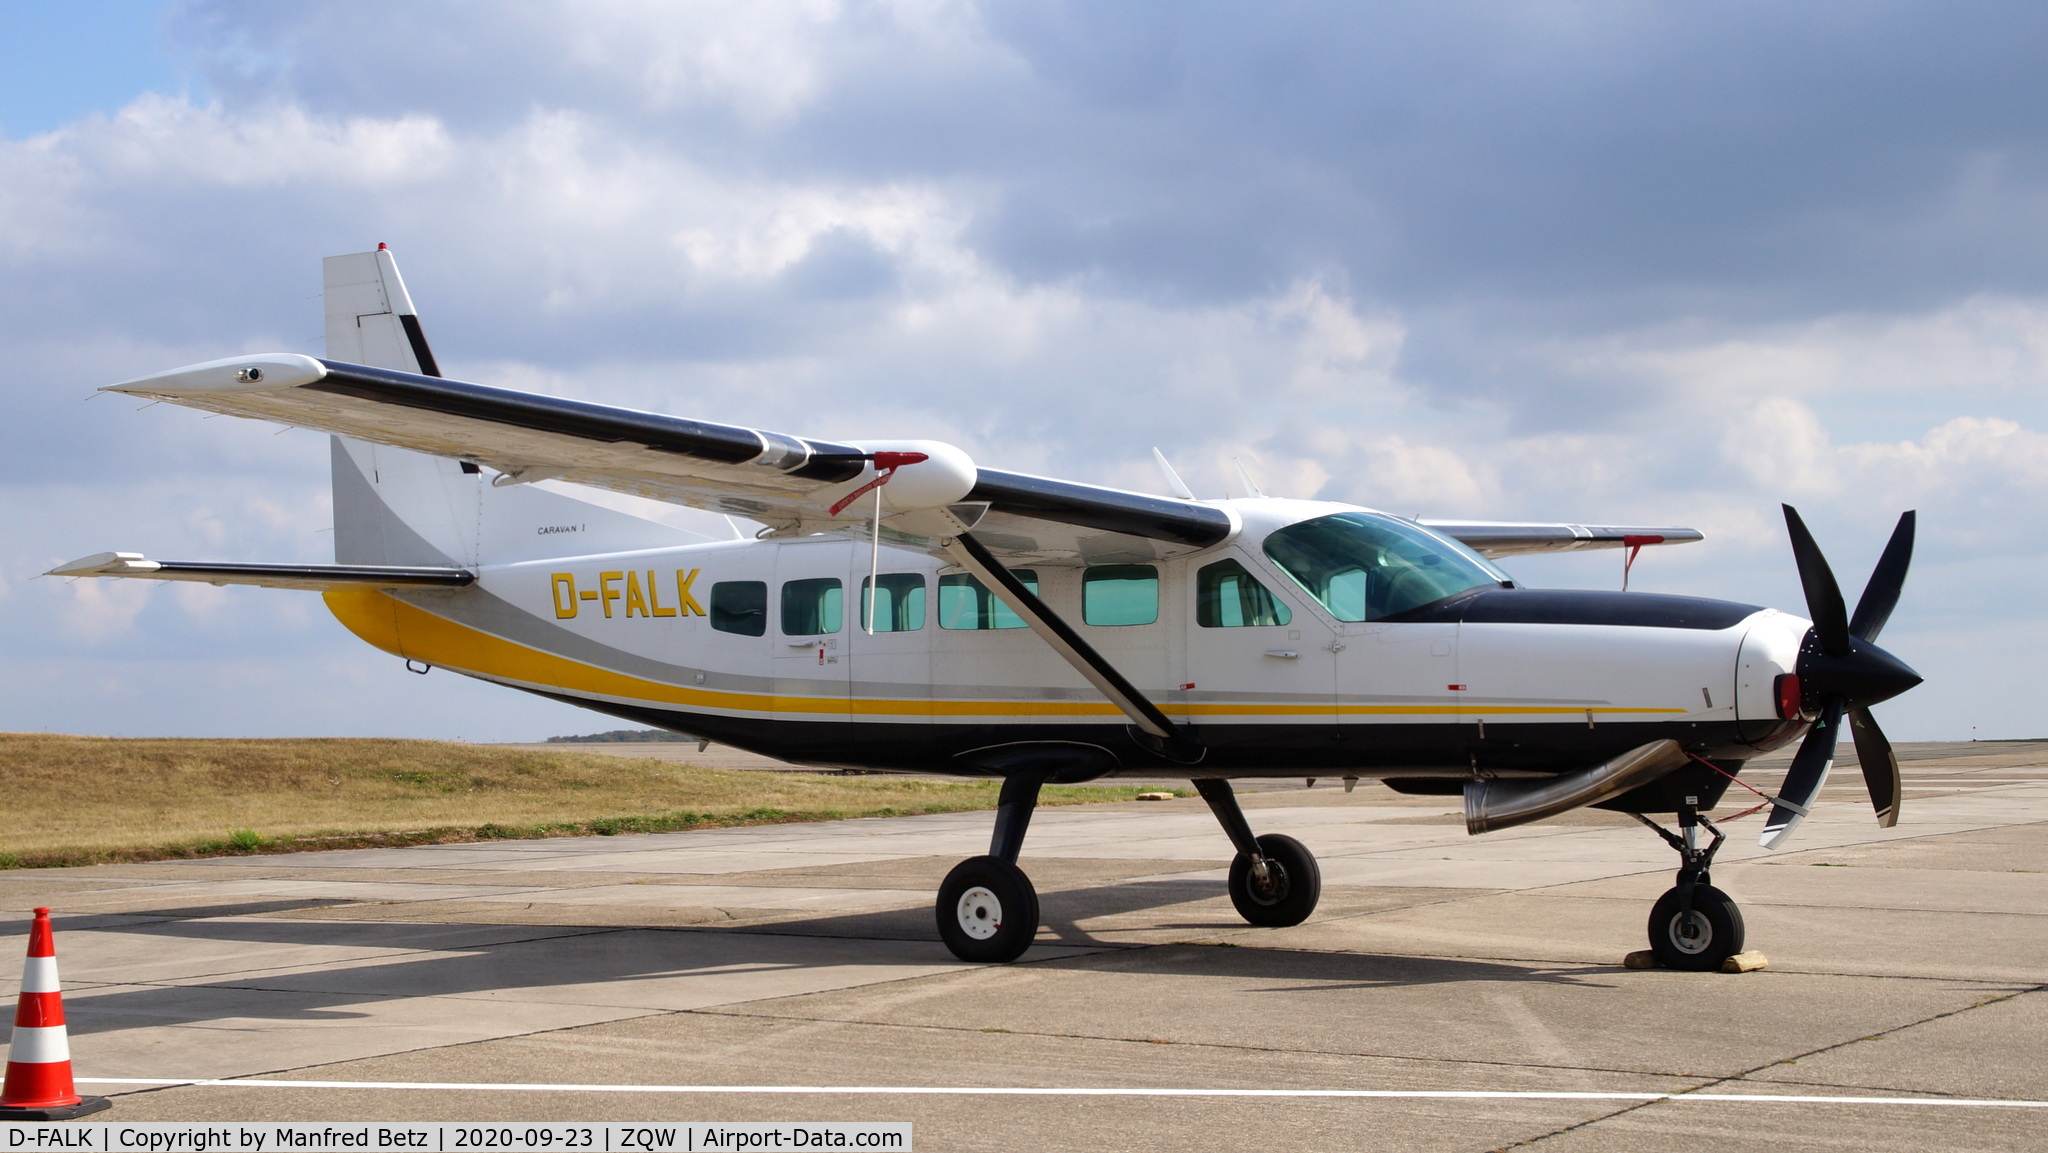 D-FALK, 1985 Cessna 208 Caravan 1 C/N 208-00023, Besucher